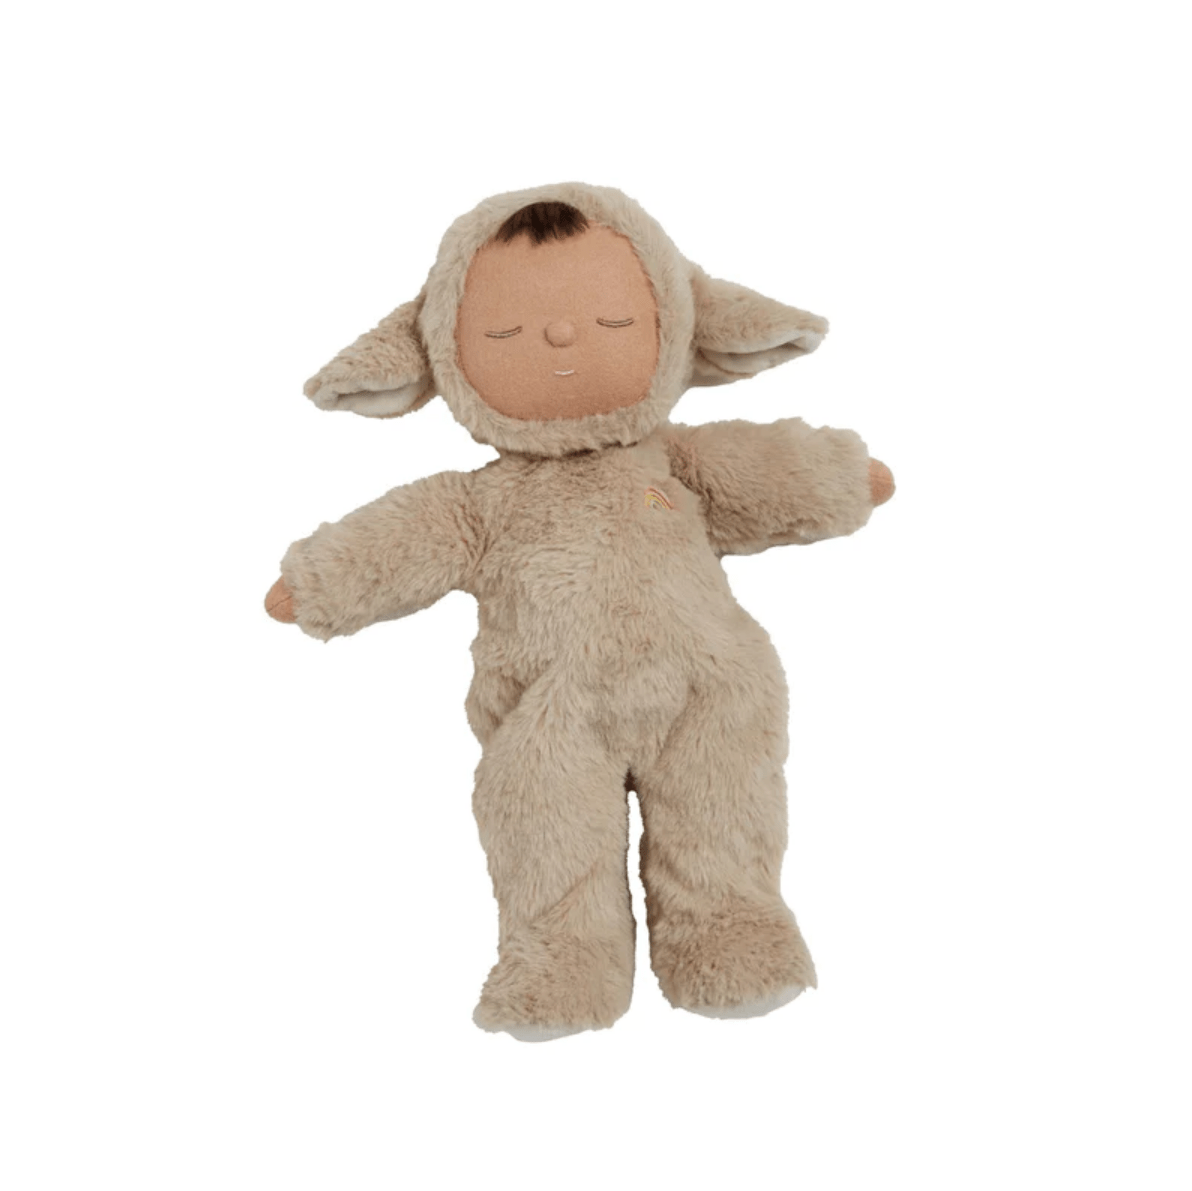 Olli Ella Rattan Cozy Dinkum Doll (Lamby Pip) by Olli Ella Wamble Walker: Handmade Rattan Toy for Toddlers | Sustainable Kids' Decor